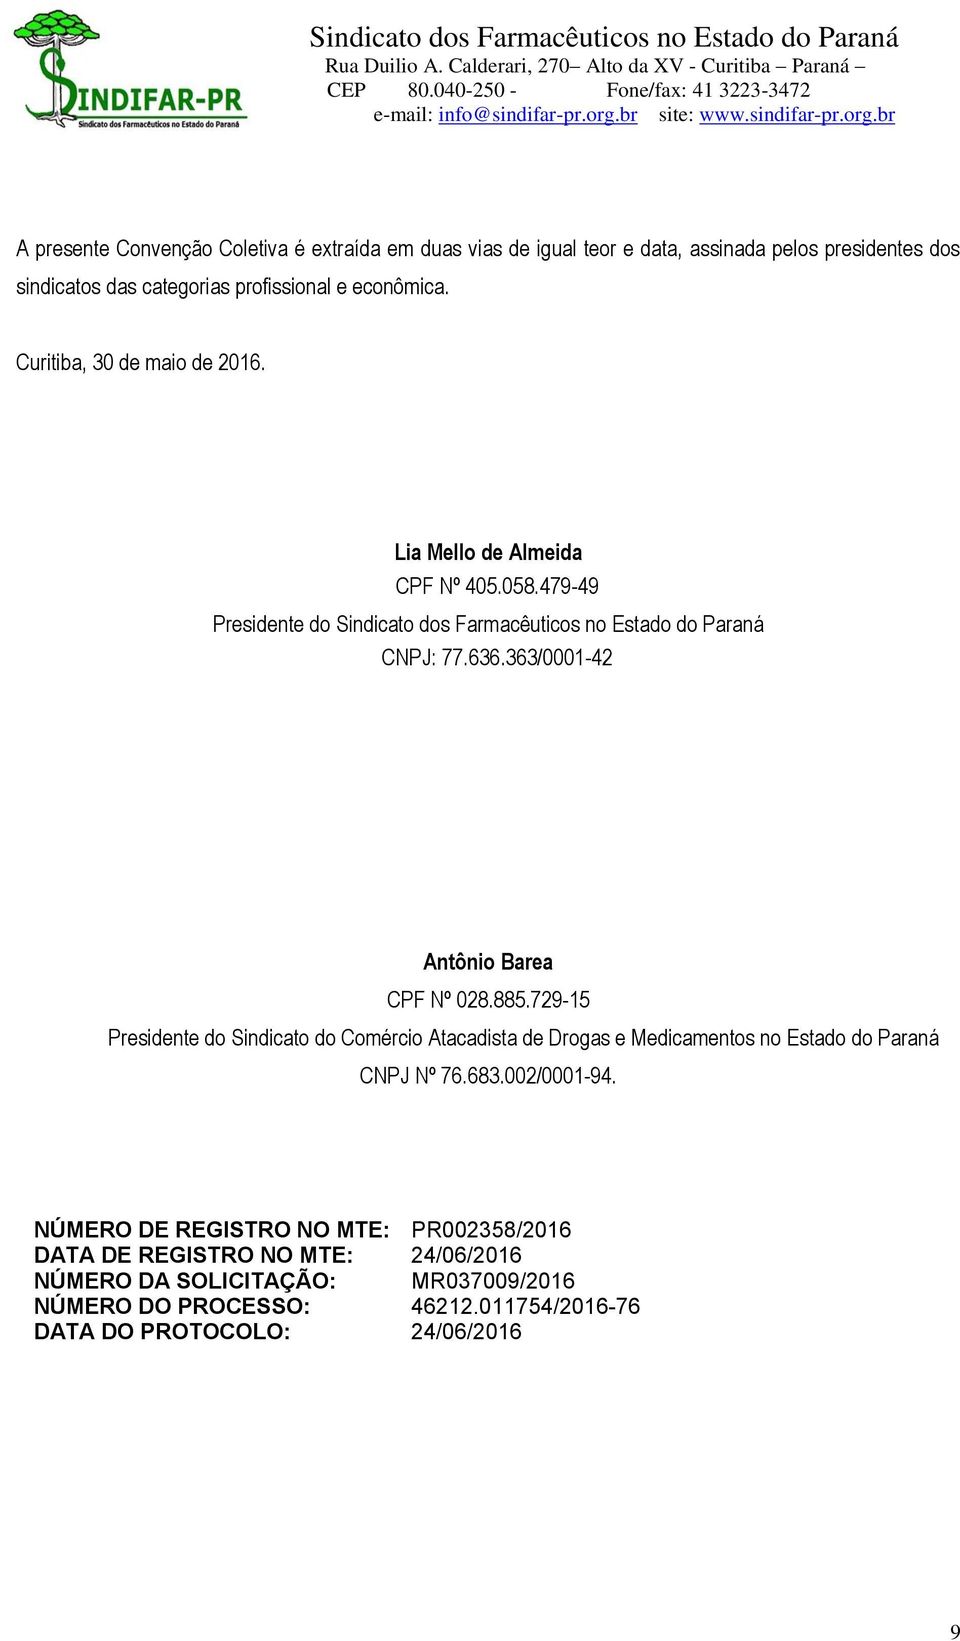 363/0001-42 Antônio Barea CPF Nº 028.885.729-15 Presidente do Sindicato do Comércio Atacadista de Drogas e Medicamentos no Estado do Paraná CNPJ Nº 76.683.